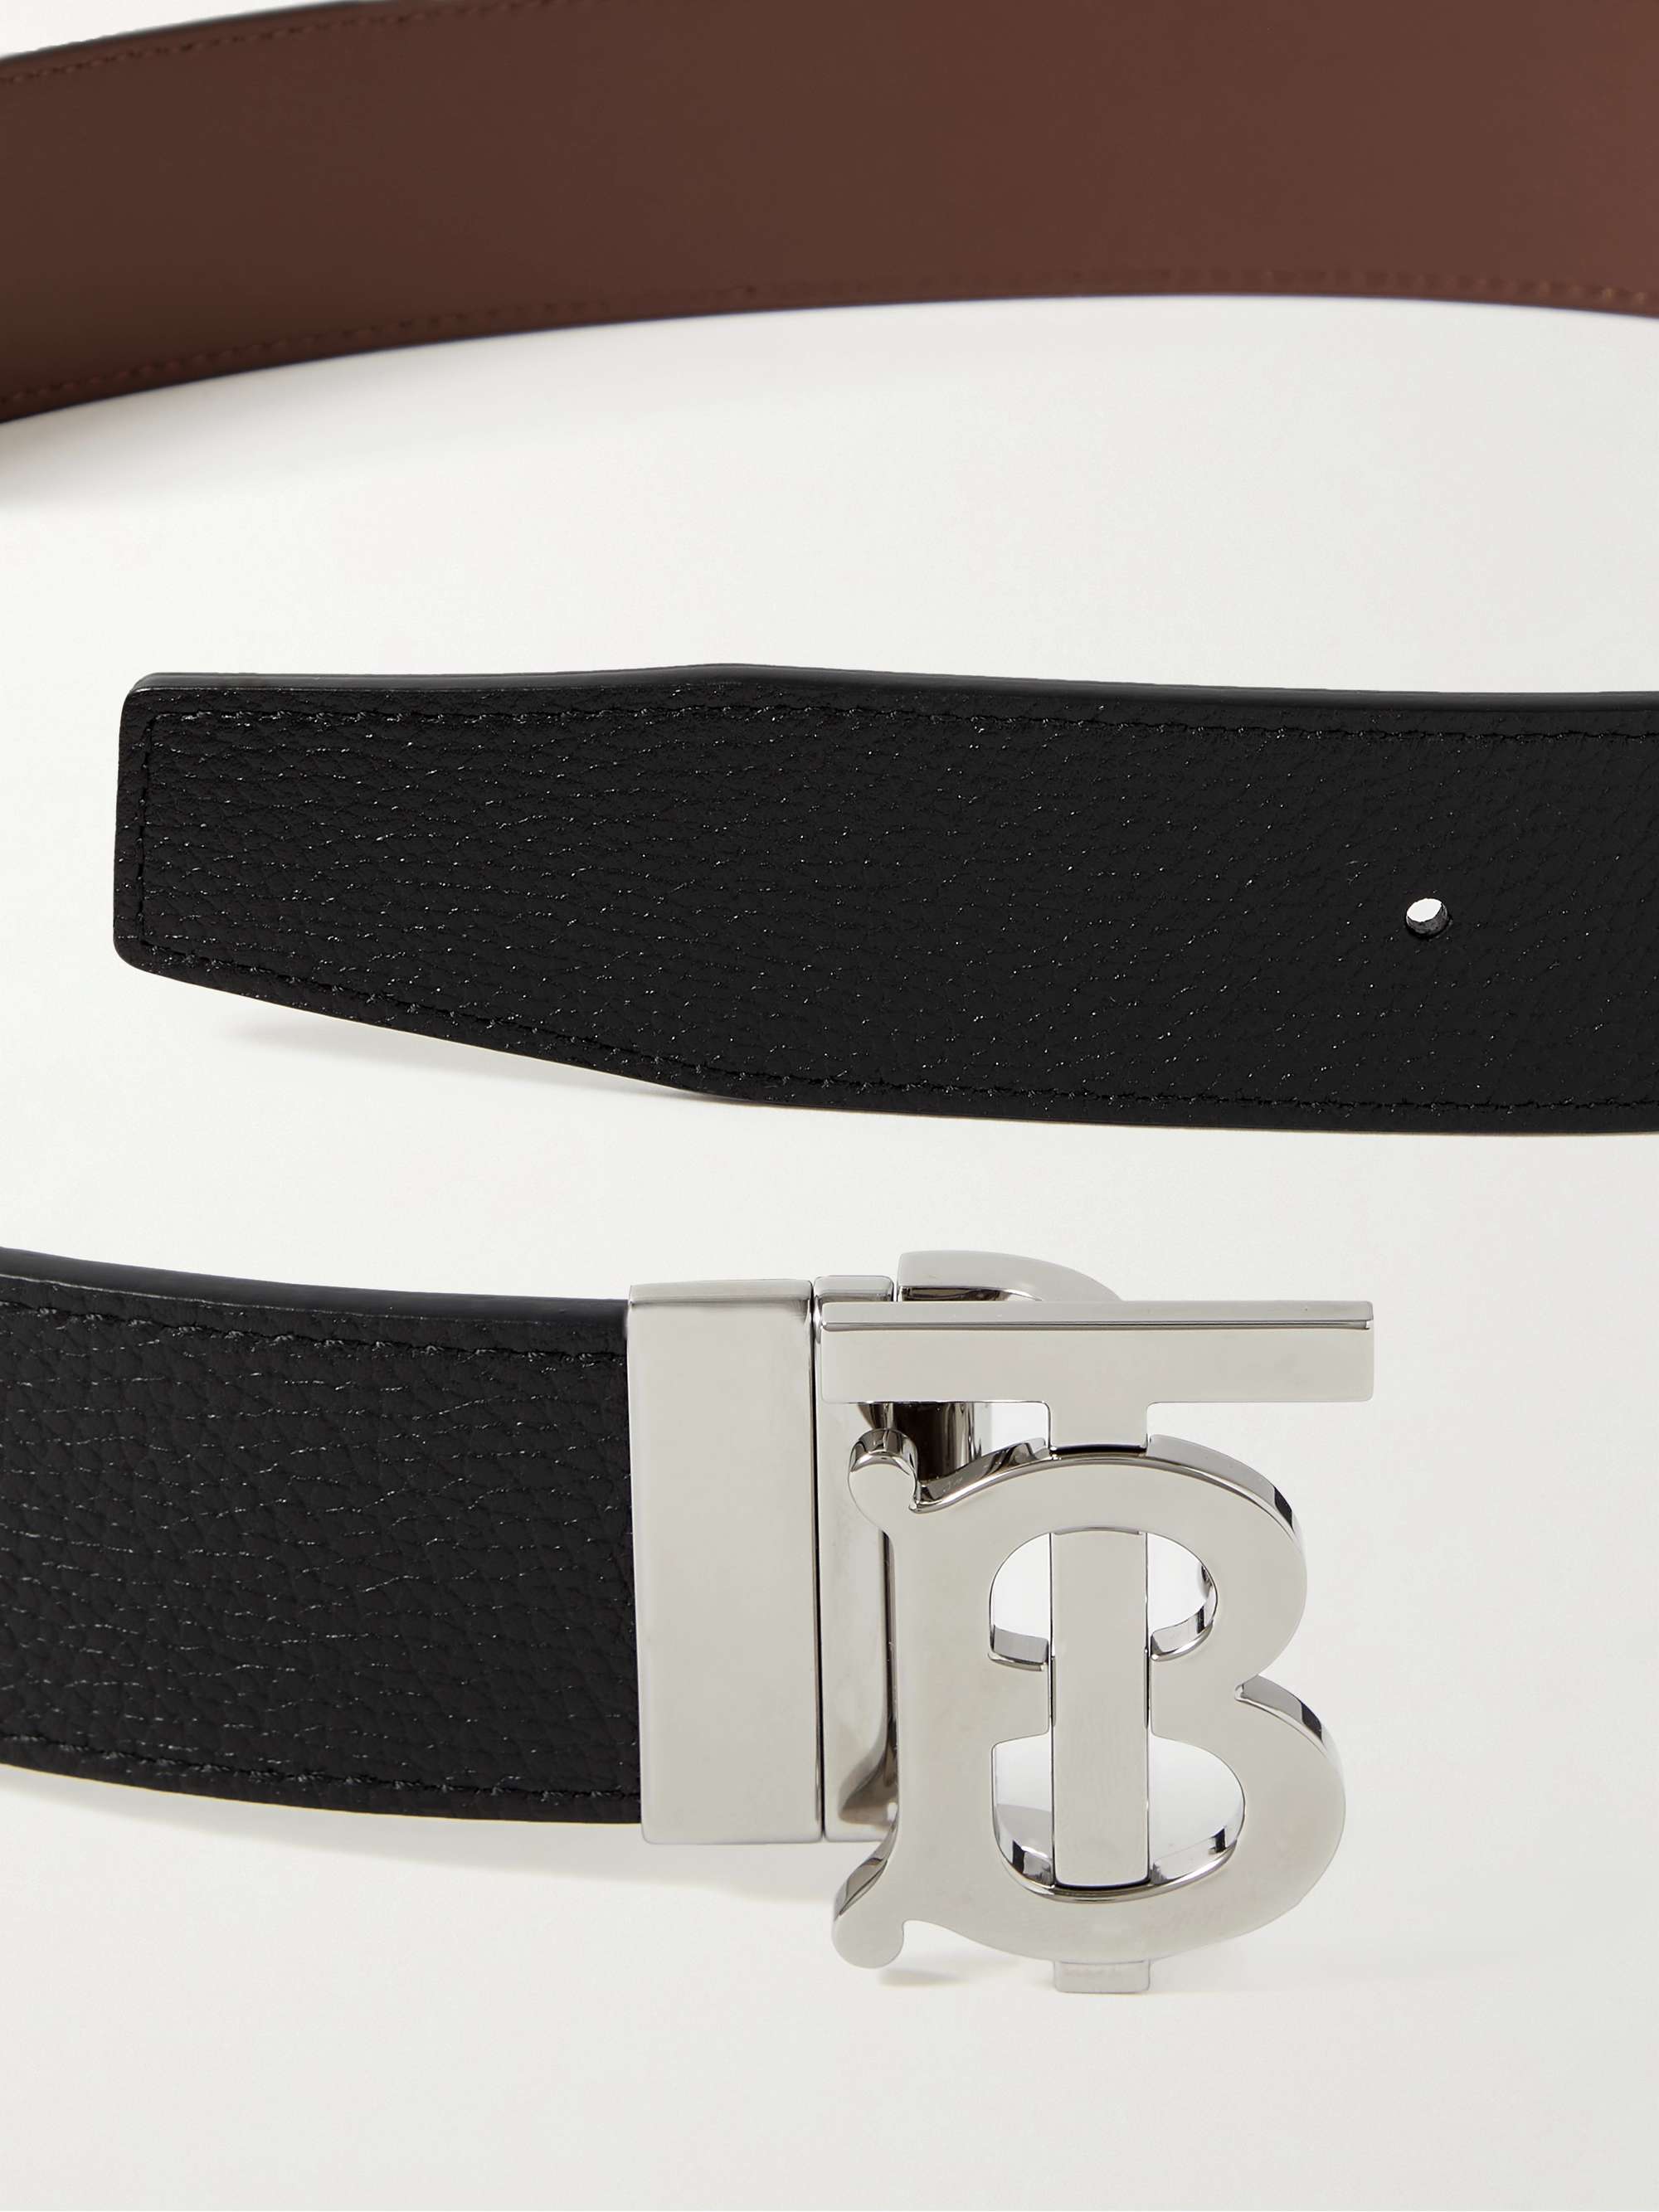 Burberry Reversible Leather Belt